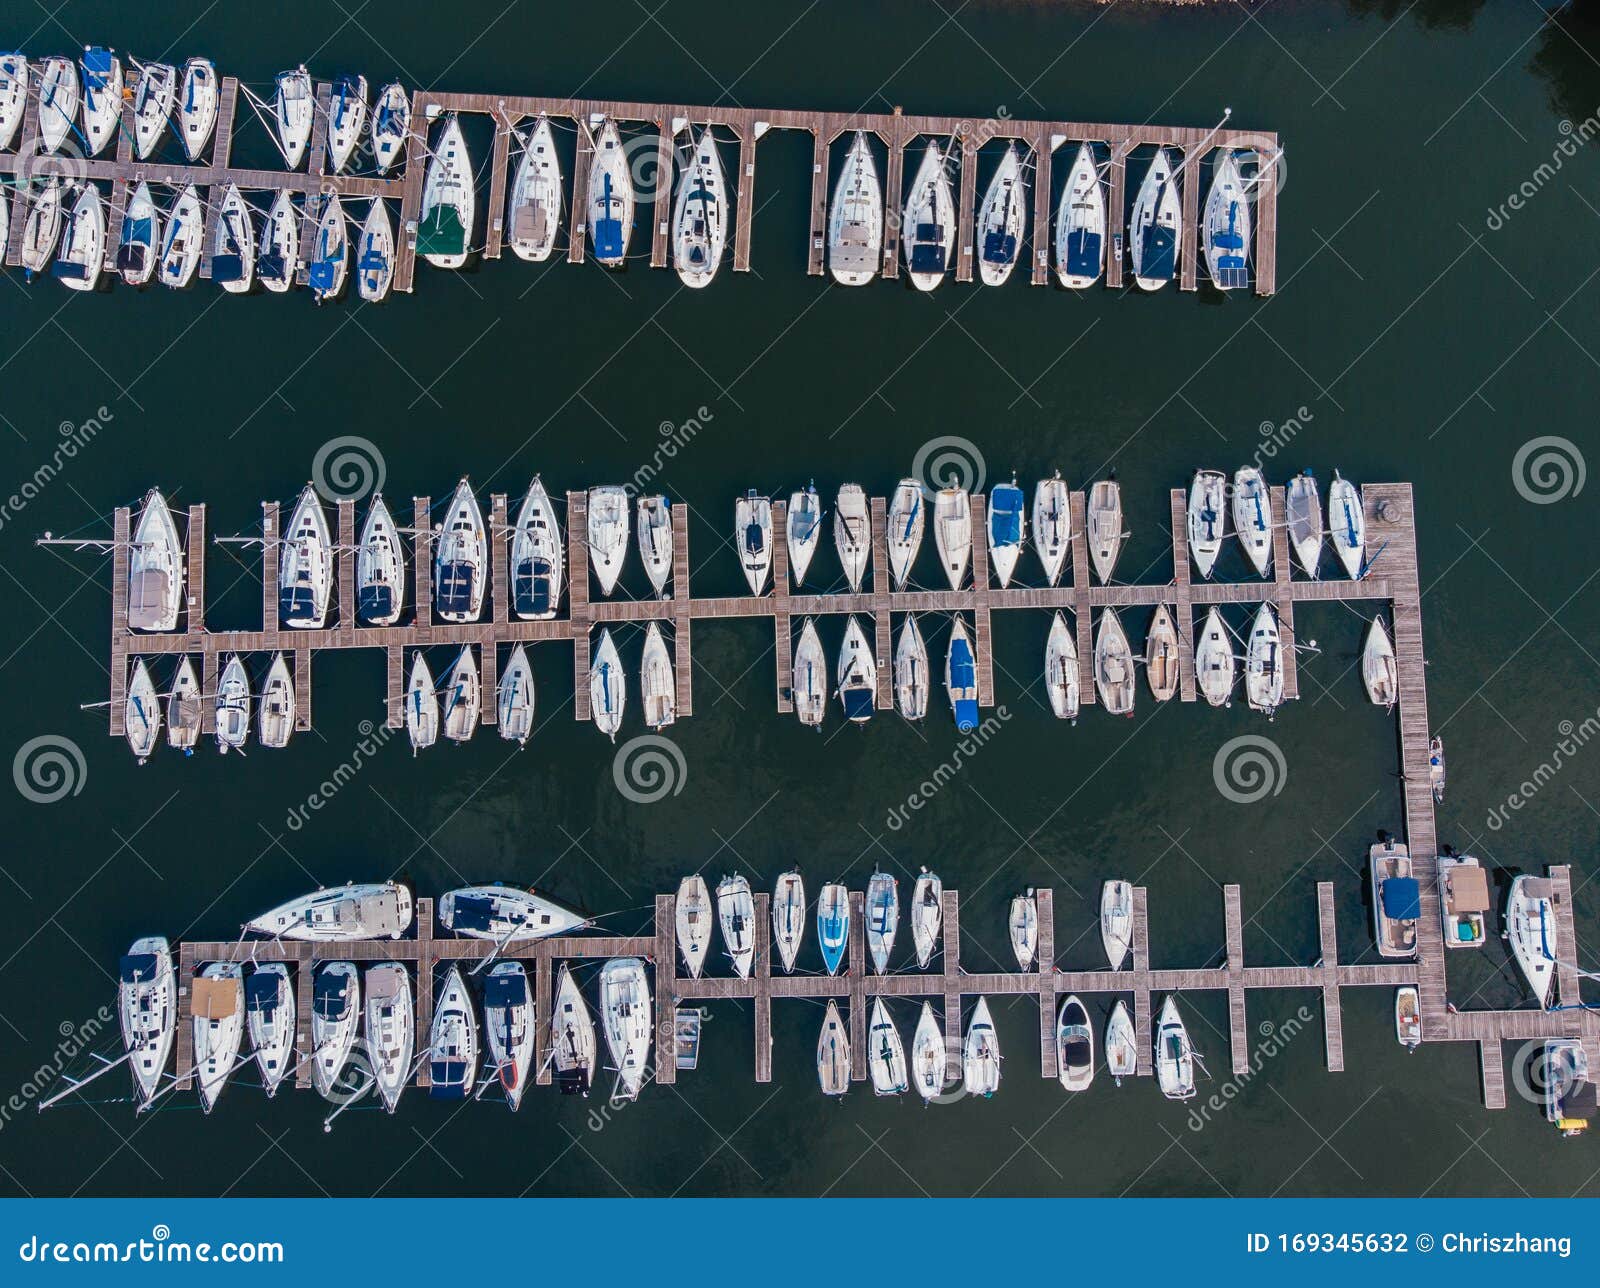 pier with boats overlook by dji mavic mini